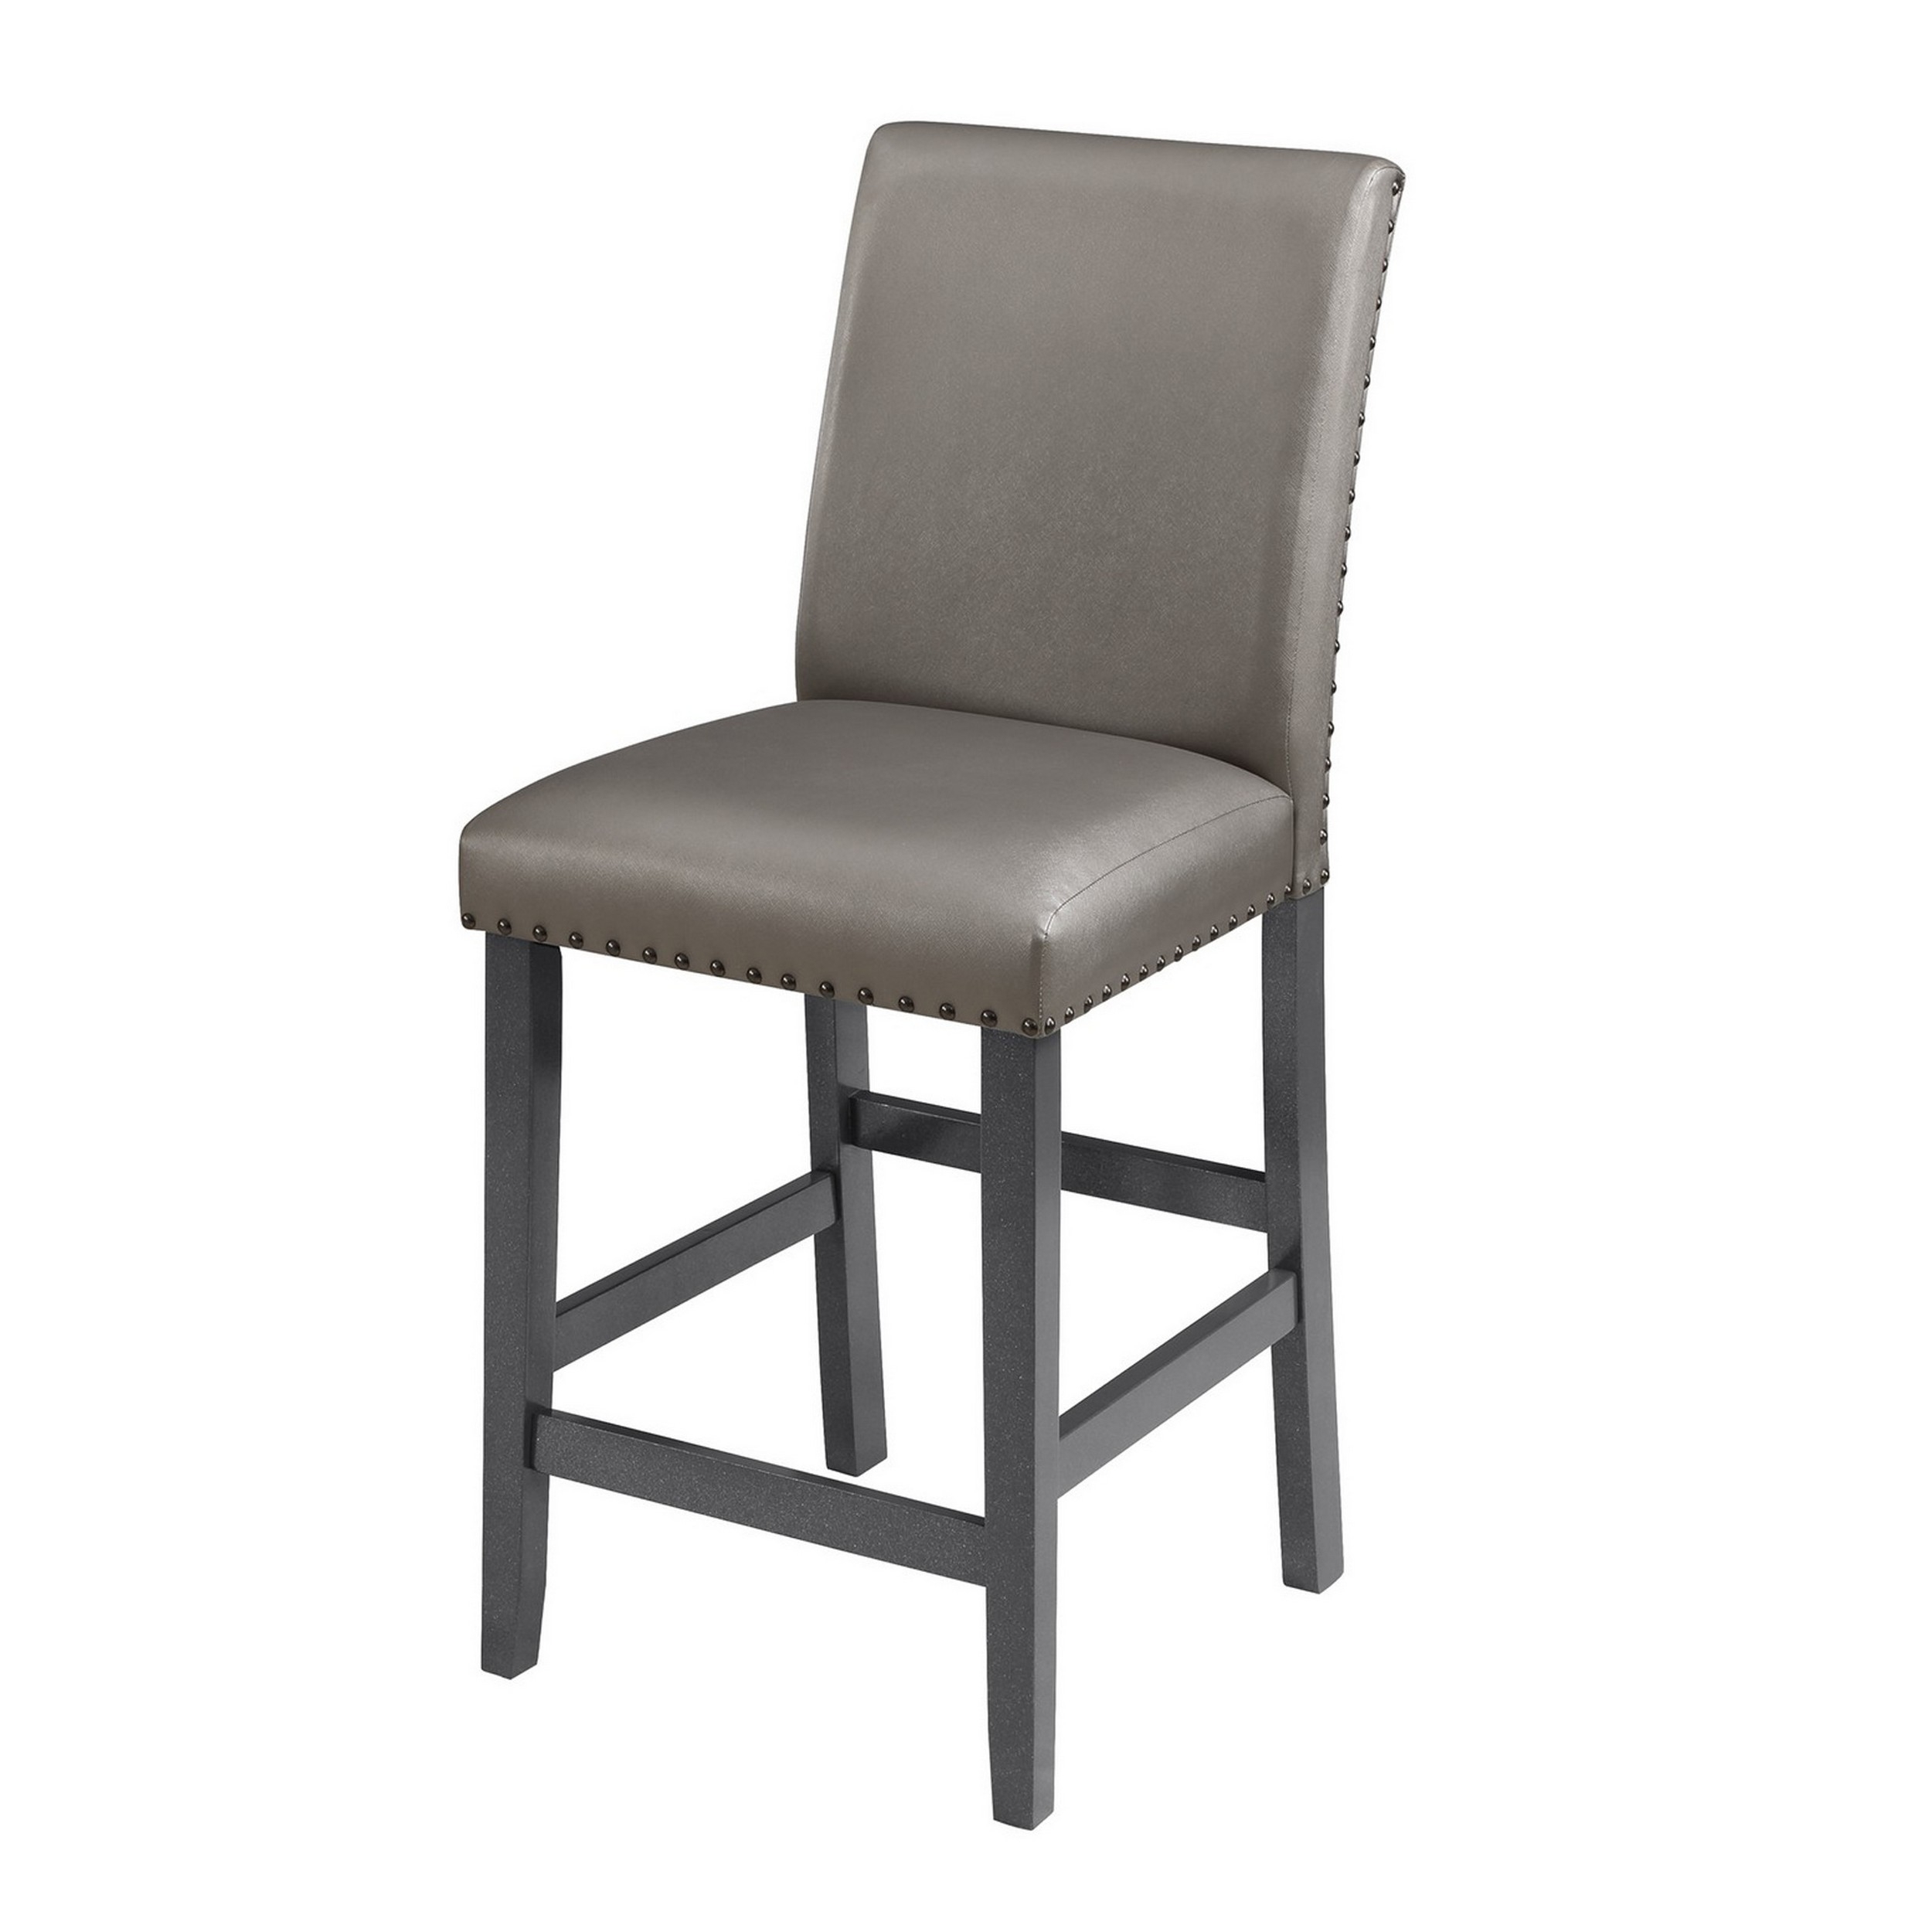 Scarlett 26 Inch Counter Height Chair Set Of 2, Plush Gray Faux Leather -Saltoro Sherpi